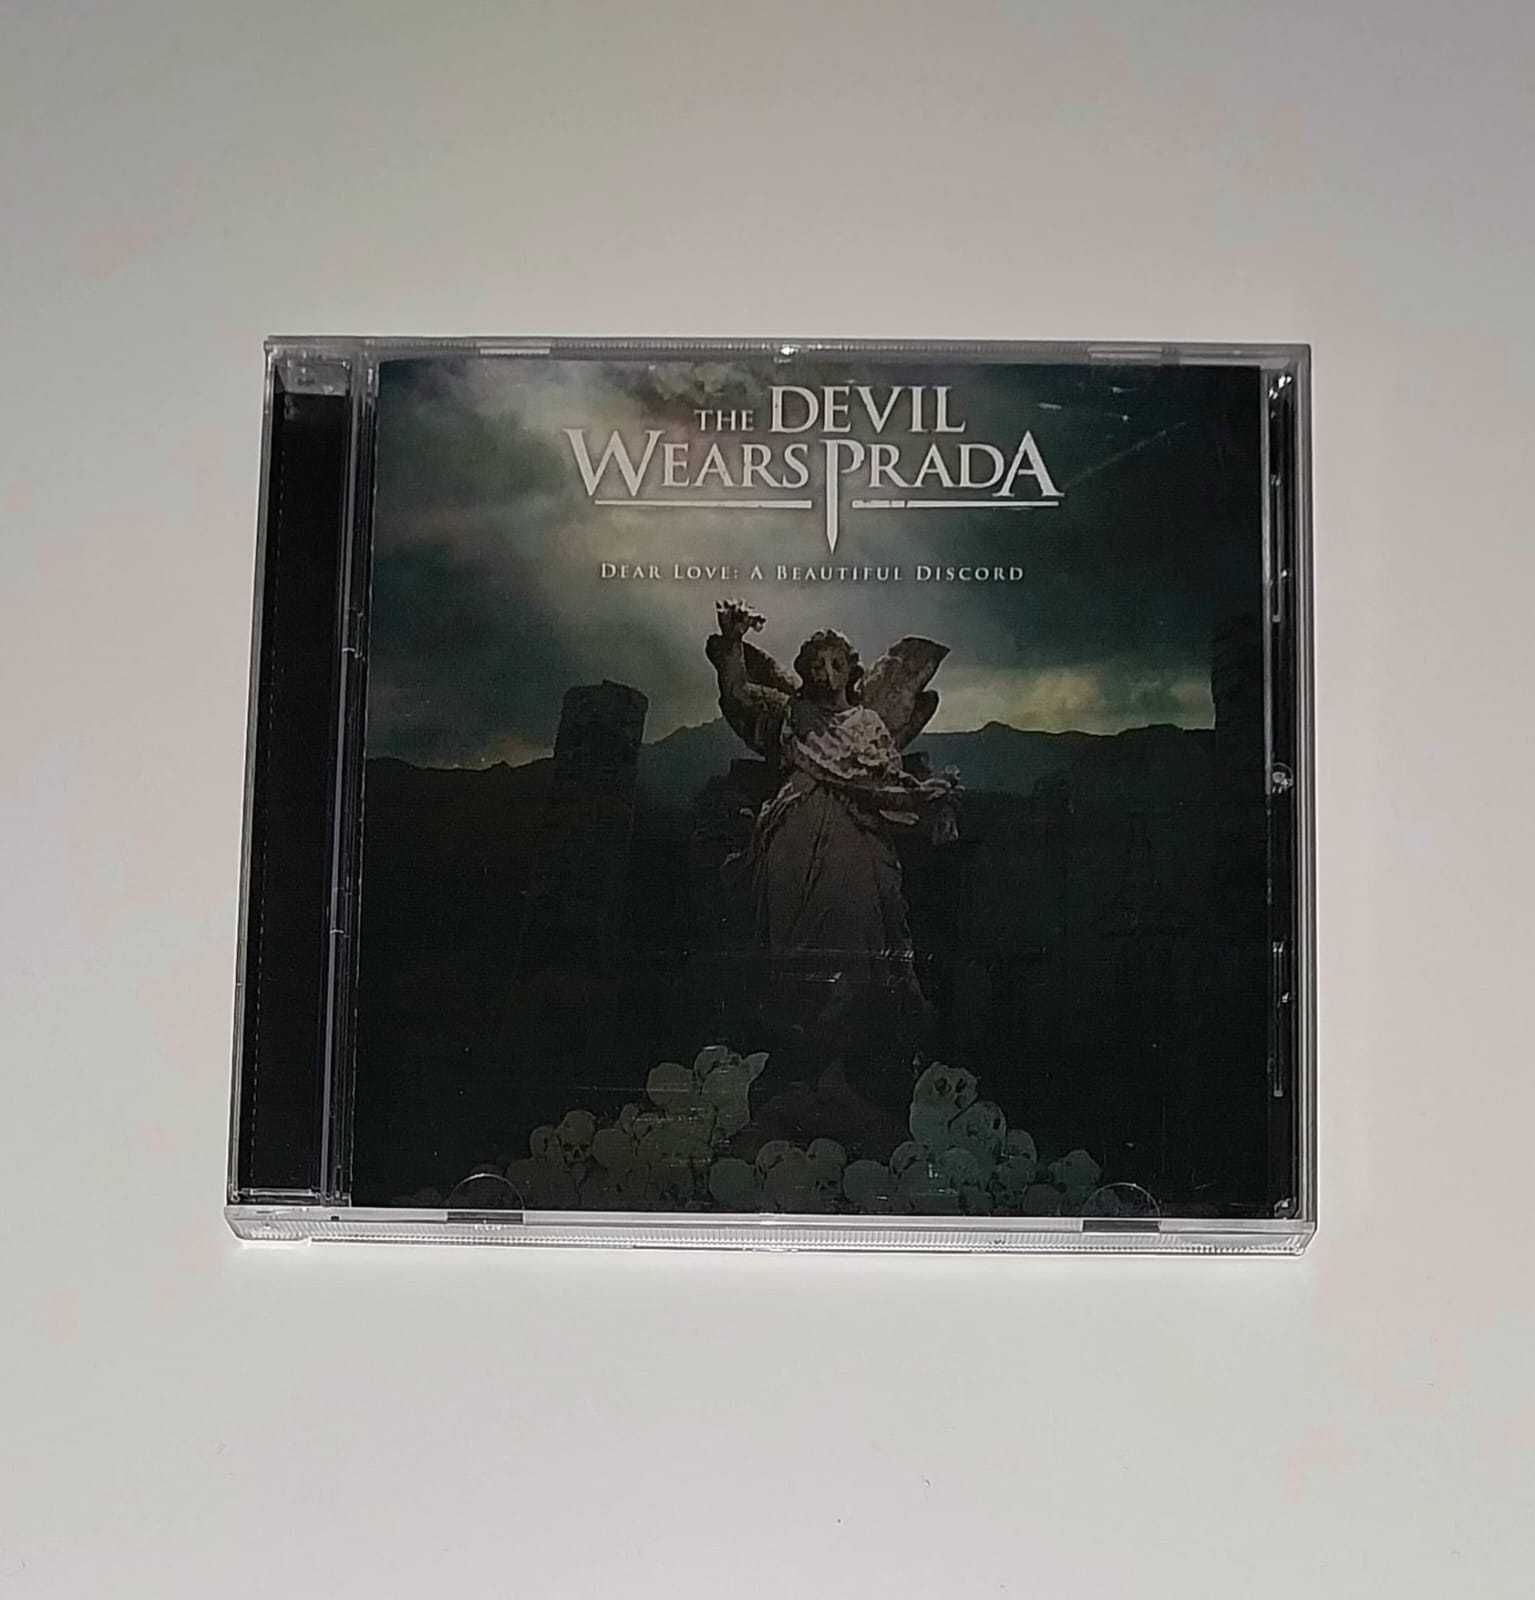 The Devil Wears Prada - Dear Love: A Beautiful Discord CD